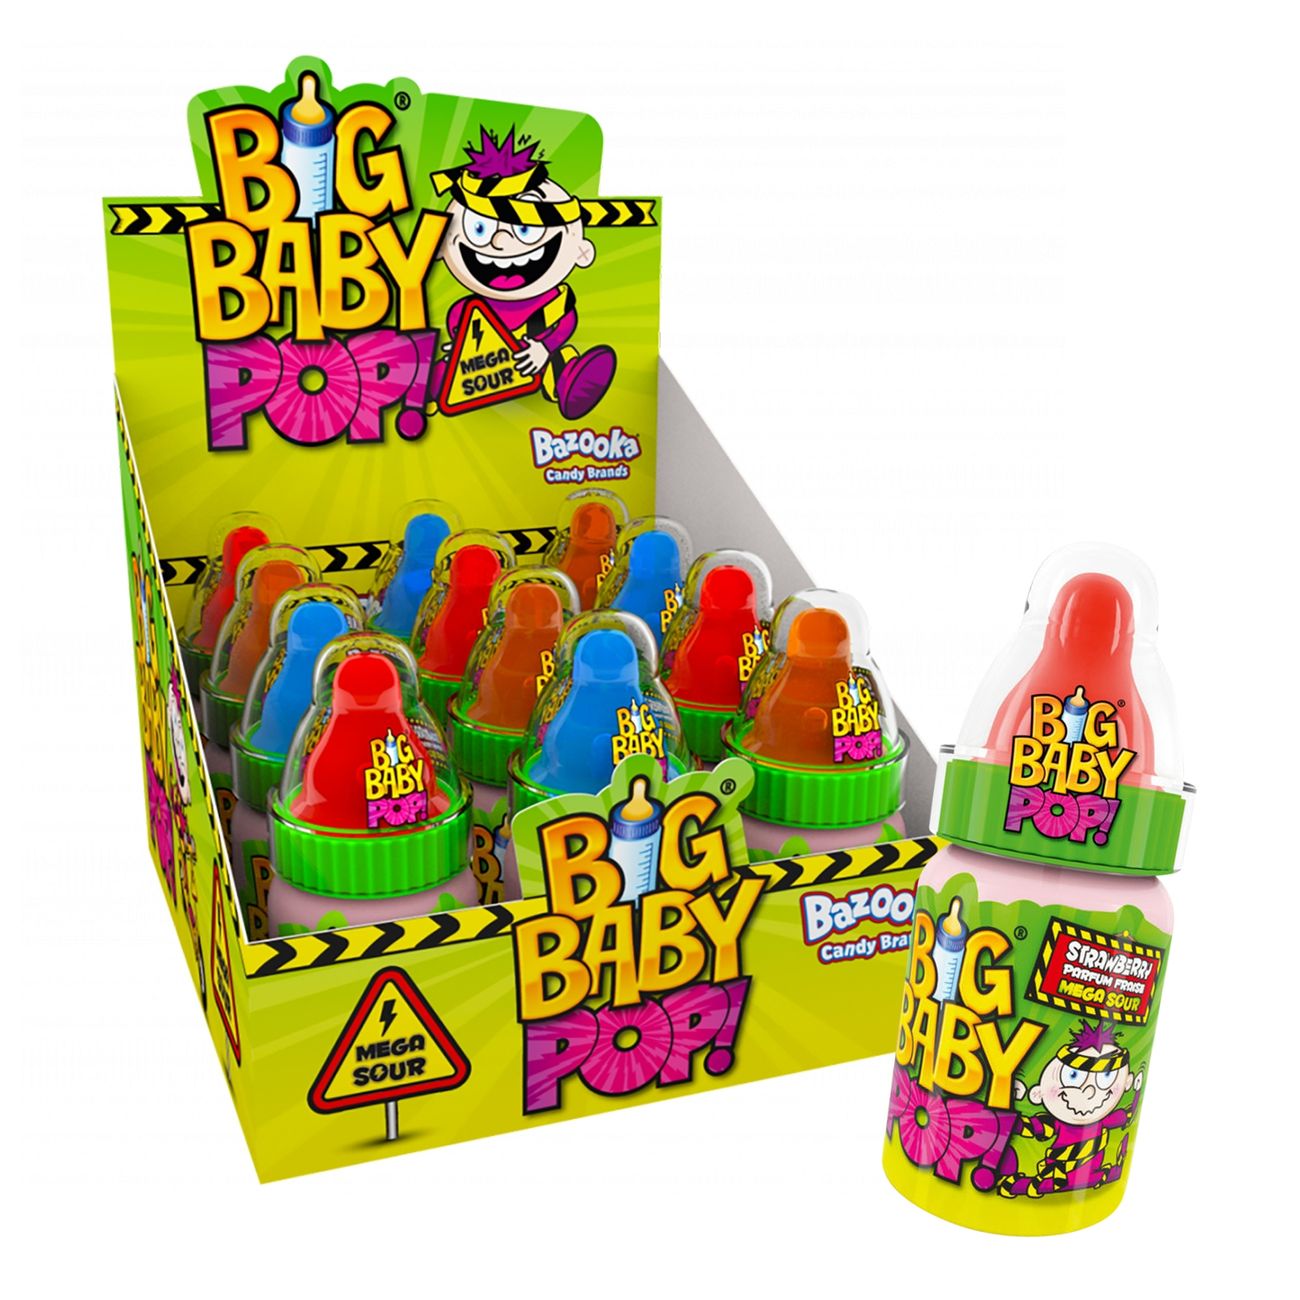 big-baby-pop-sour-storpack-95408-2